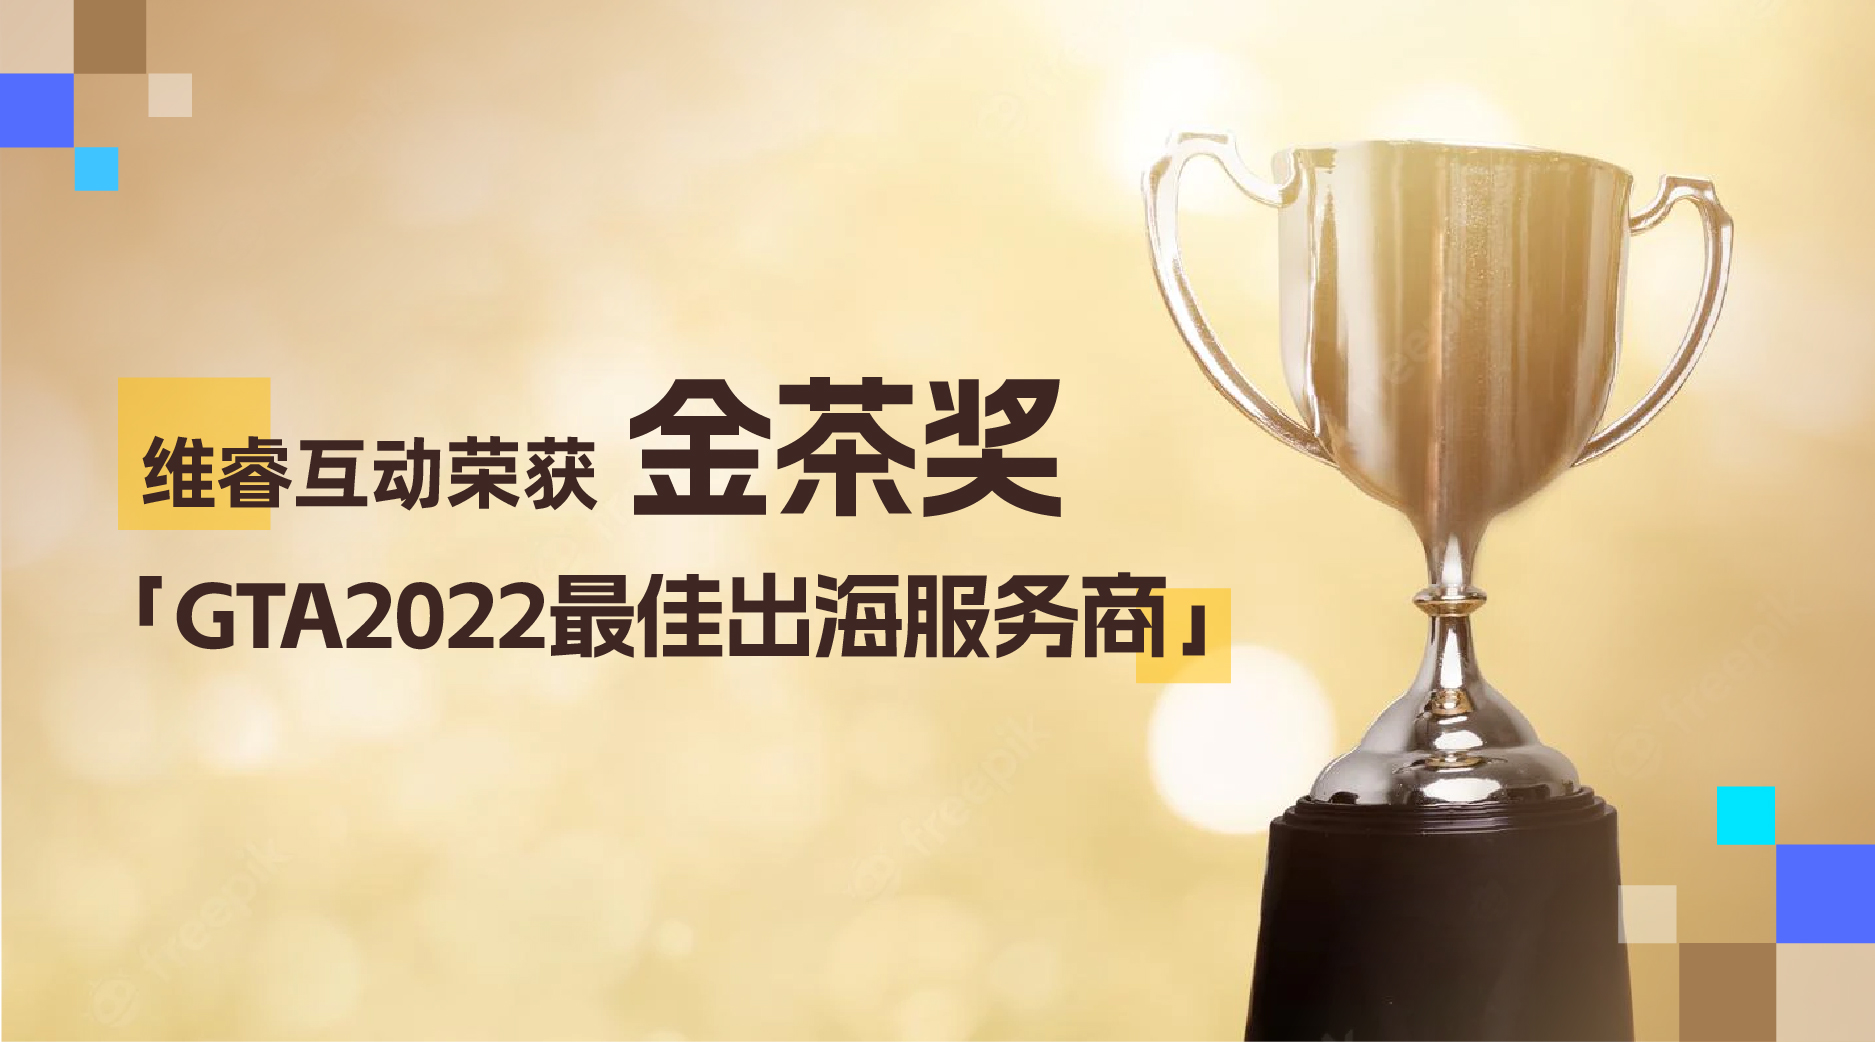 GAME NEWAGE 喜提第十届金茶奖「GTA2022最佳出海服务商」奖项